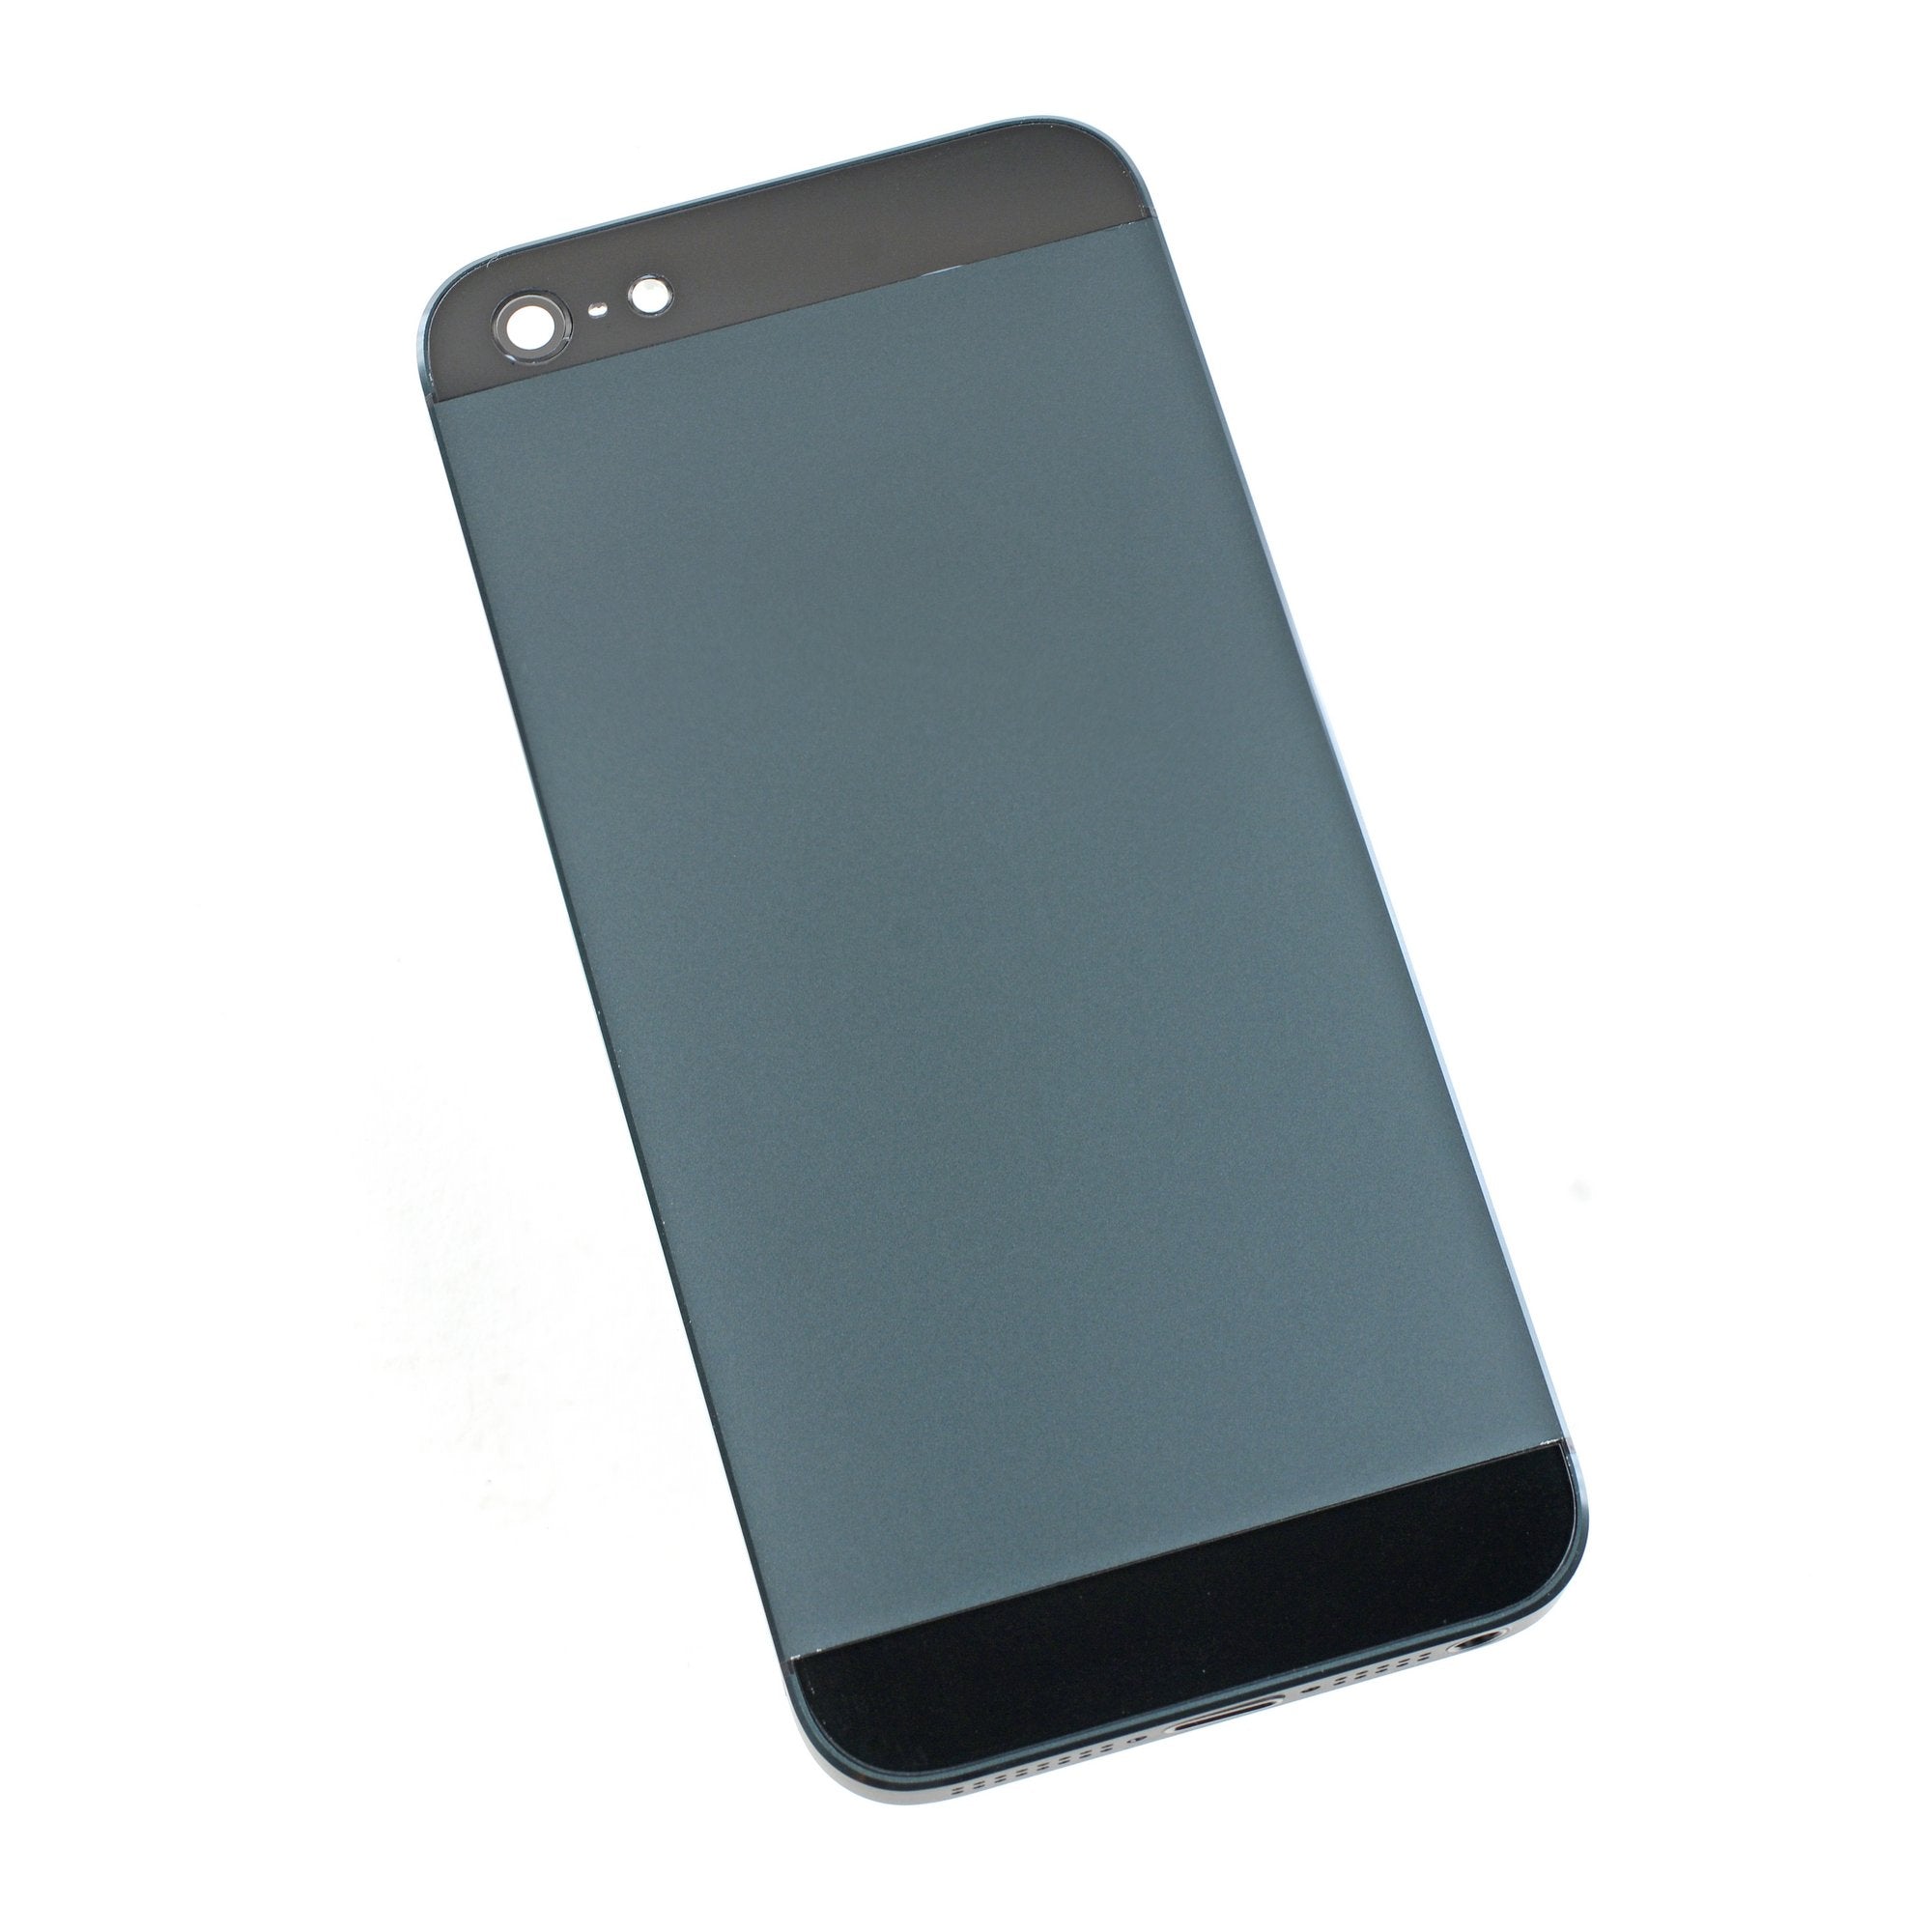 iPhone 5 Blank Rear Case Black New